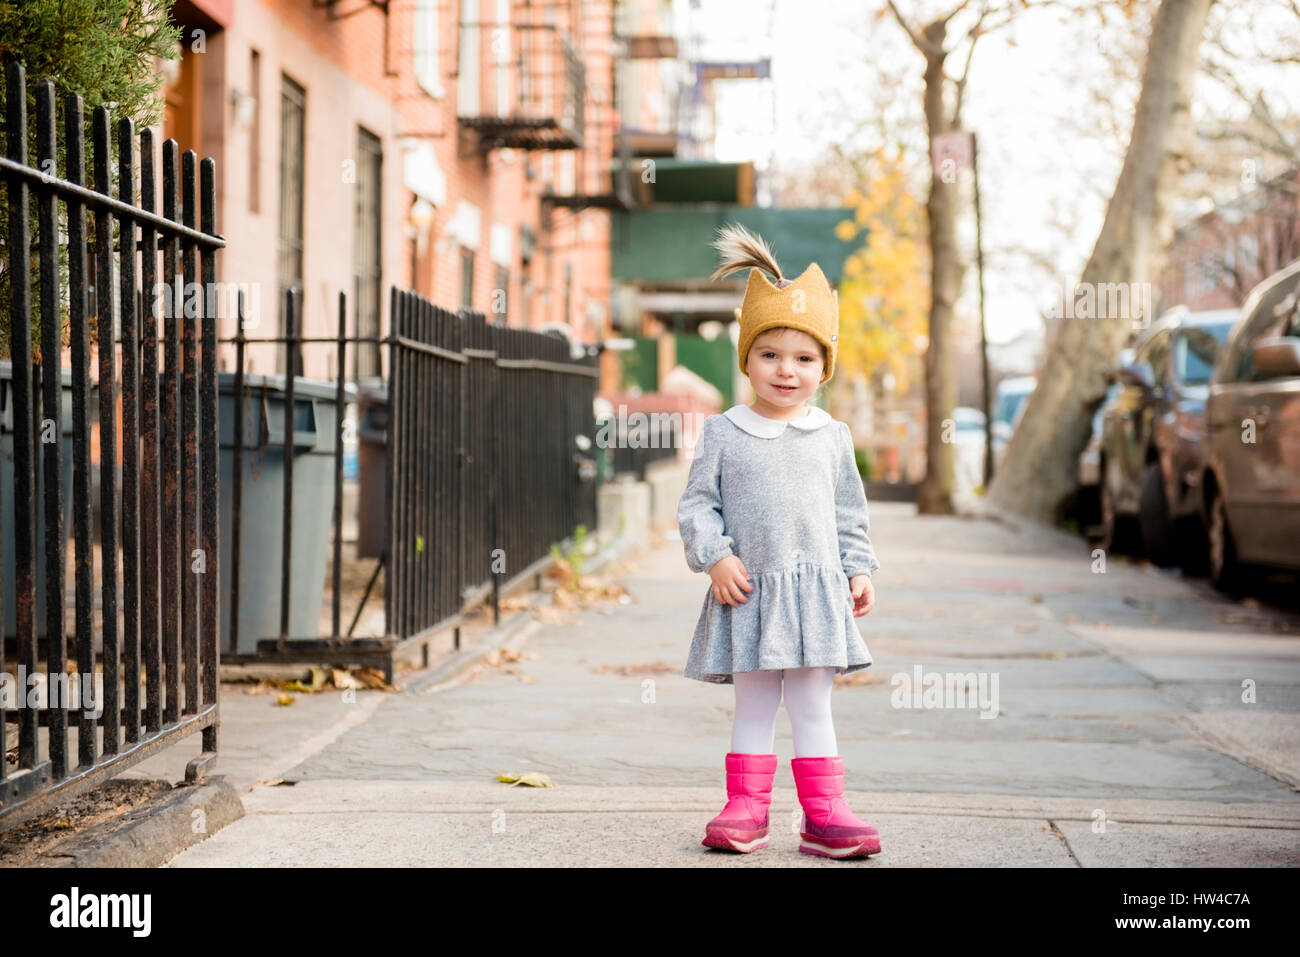 Smiling Caucasian baby girl wearing crown hat on city sidewalk Stock Photo